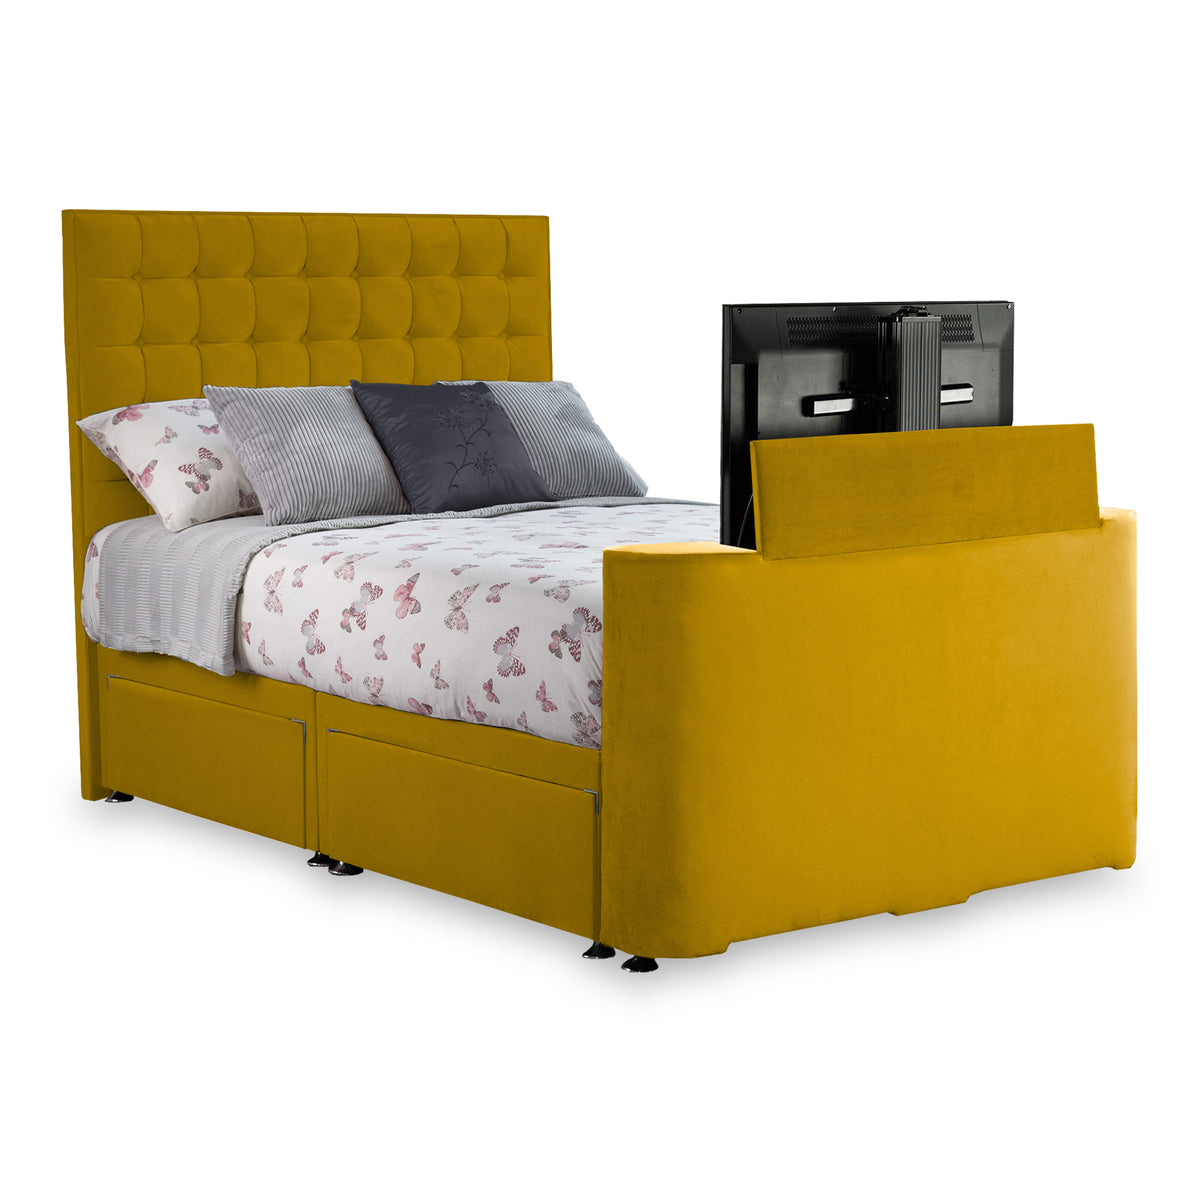 Bridgeford 4 Drawer TV Bed from Roseland Furniture